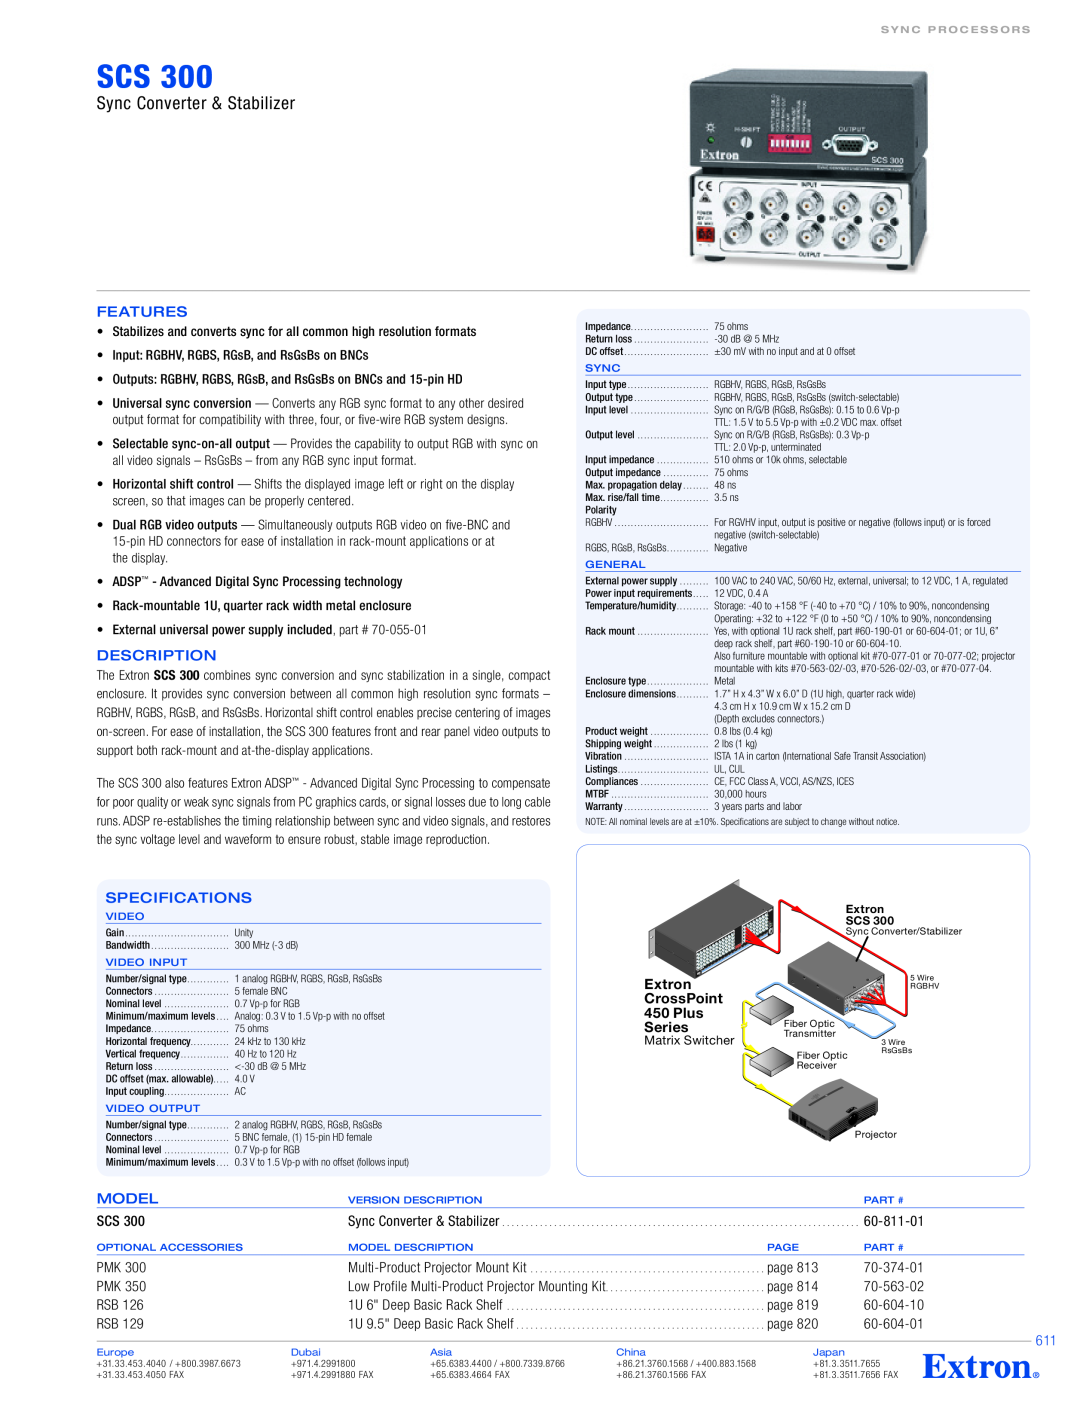 Extron electronic SCS 300 specifications Sync Converter & Stabilizer, Features, Description, Specifications, Extron, Plus 